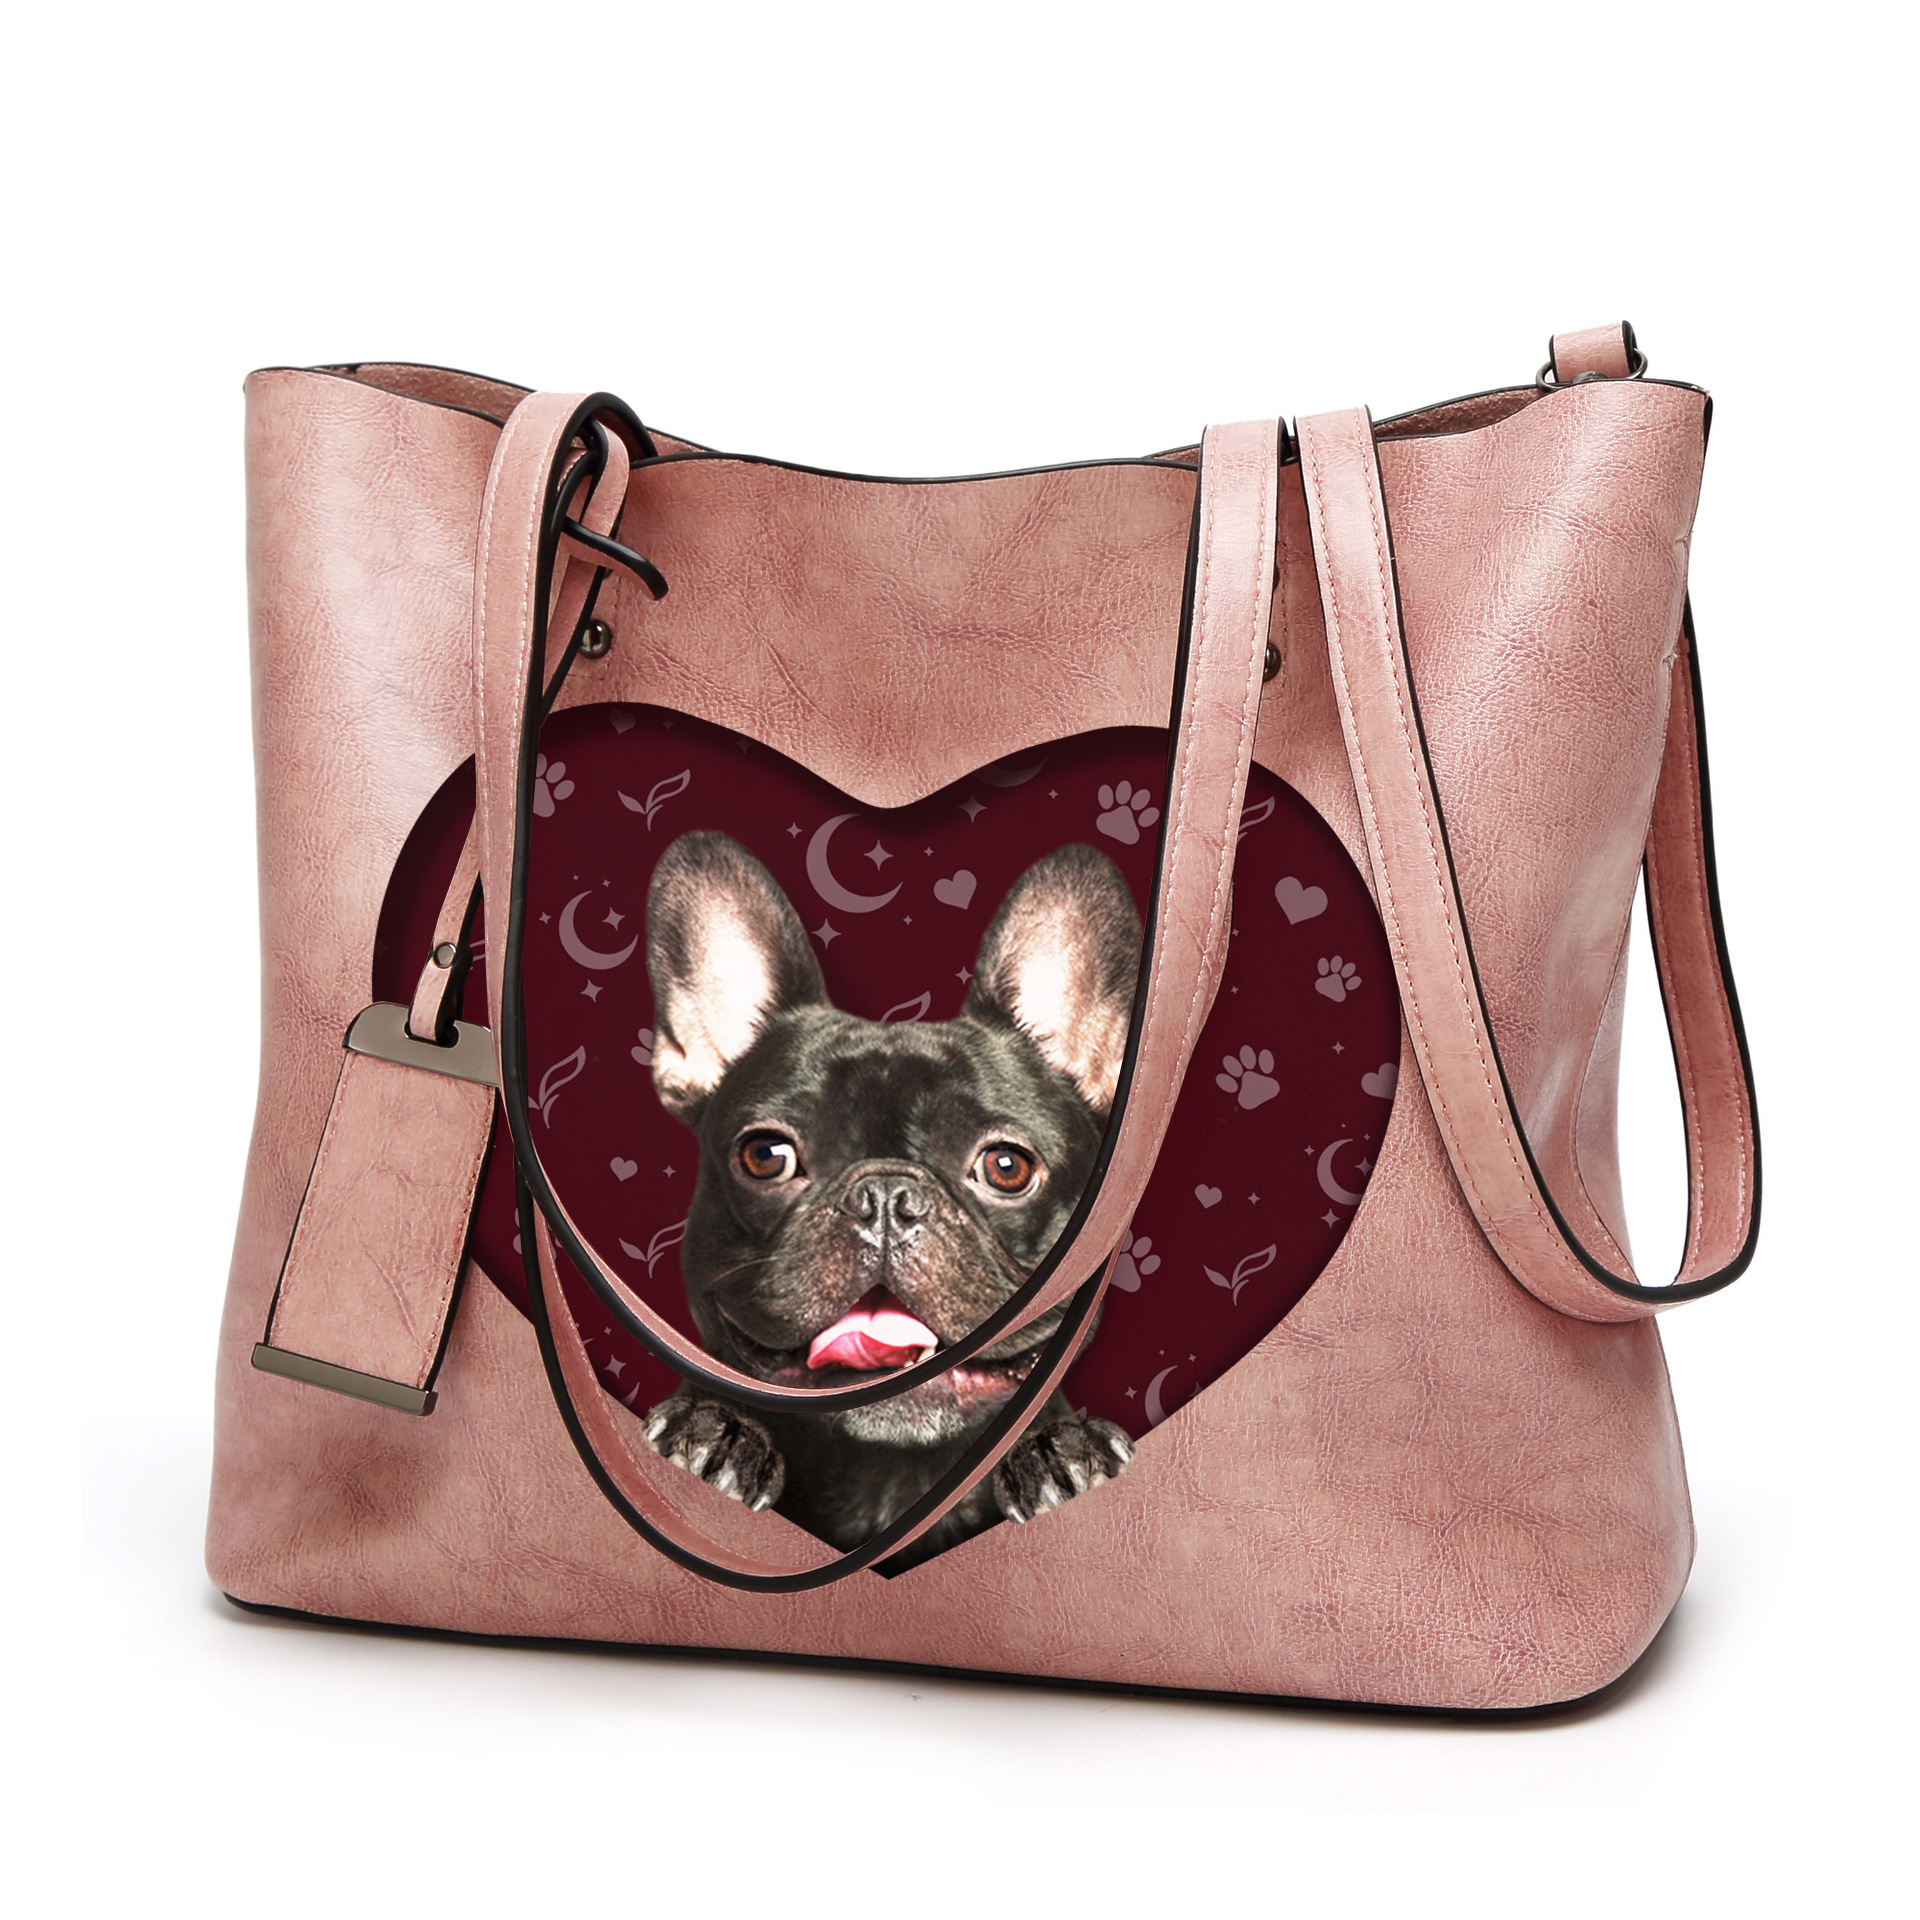 I Know I'm Cute - French Bulldog Glamour Handbag V2 - 8